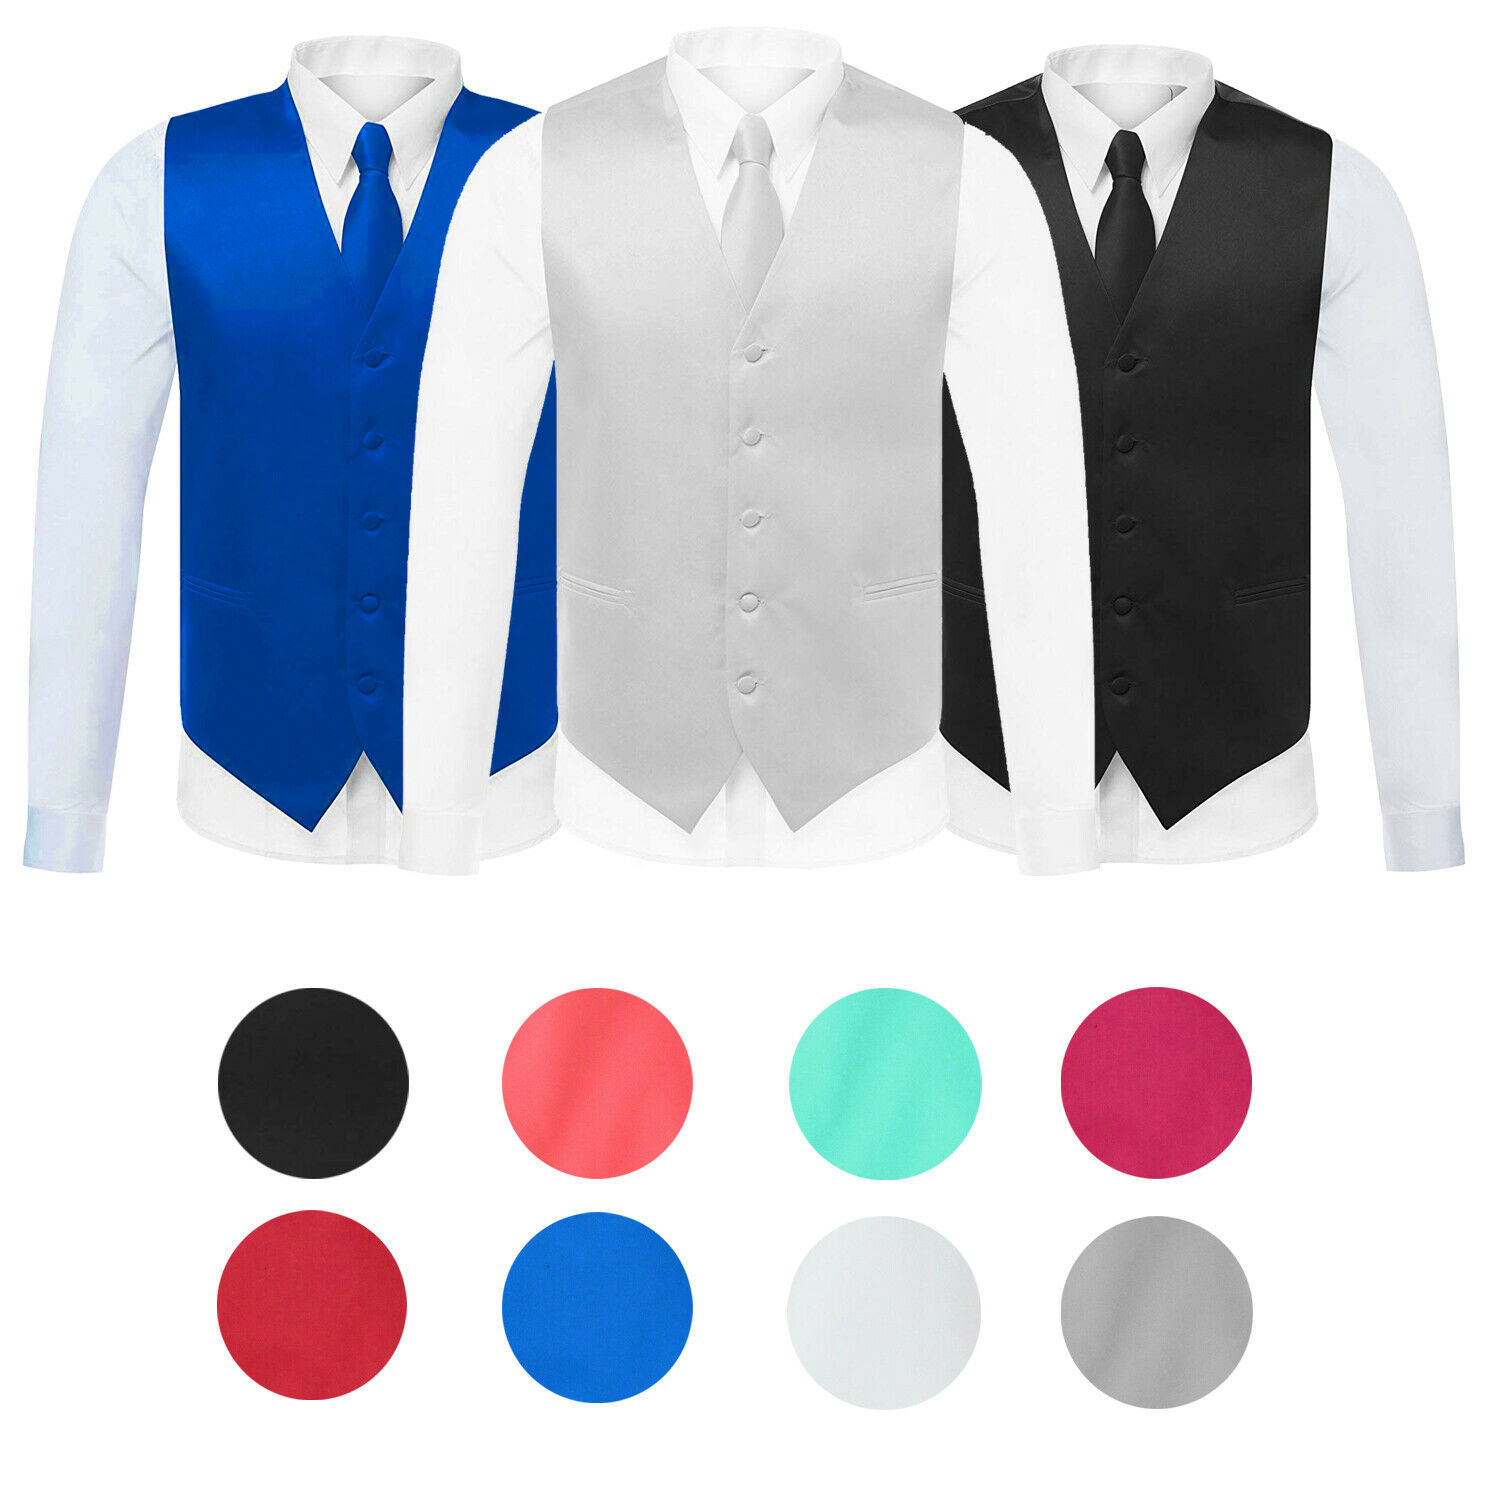 Primary image for Men's Solid Color Adjustable Dress Vest & Neck Tie Set for Suit or Tuxedo